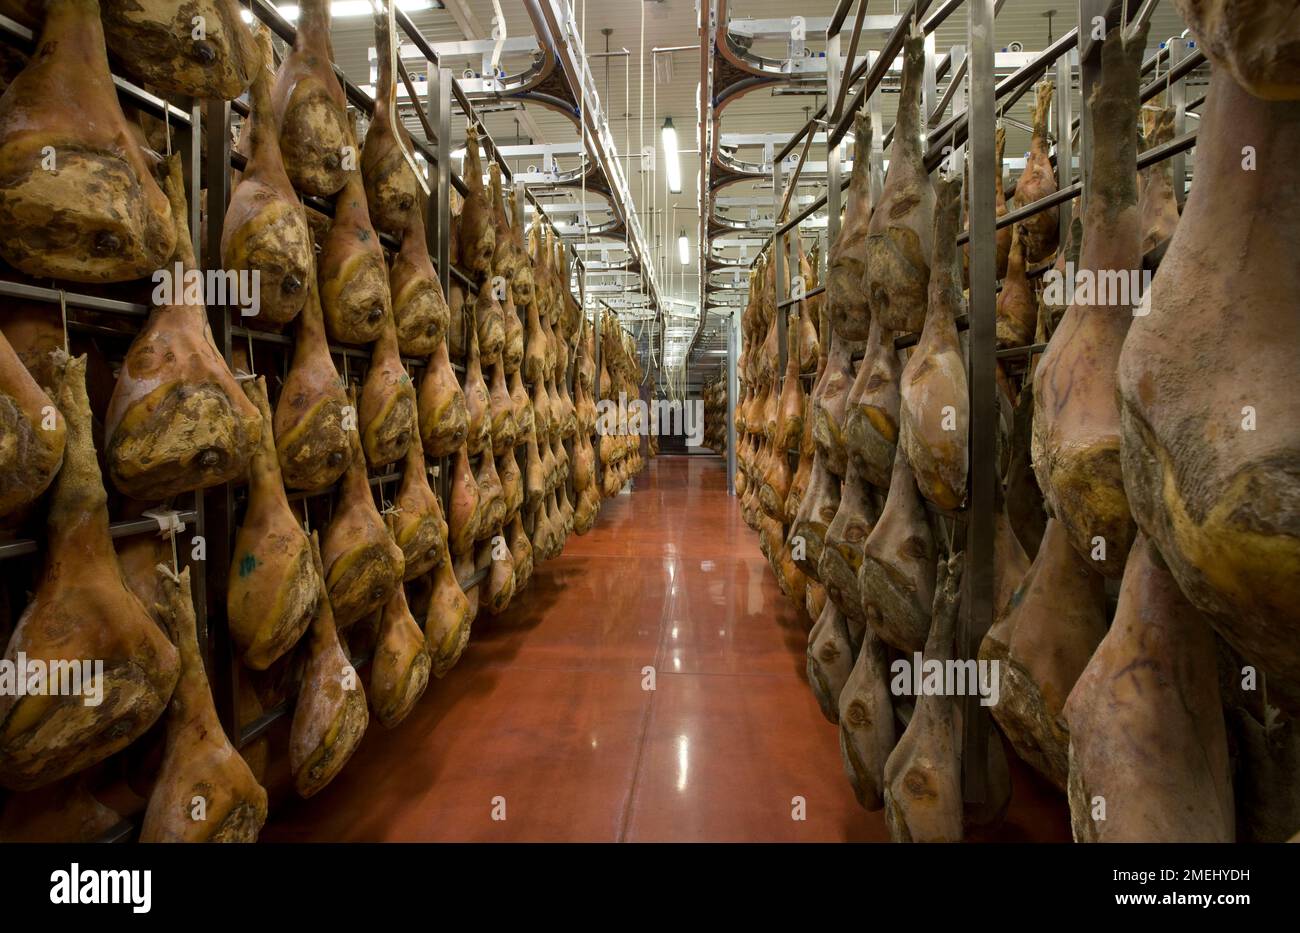 Hams in long rows at the San Daniele ham manufacturer DOK DALL'AVA Stock Photo